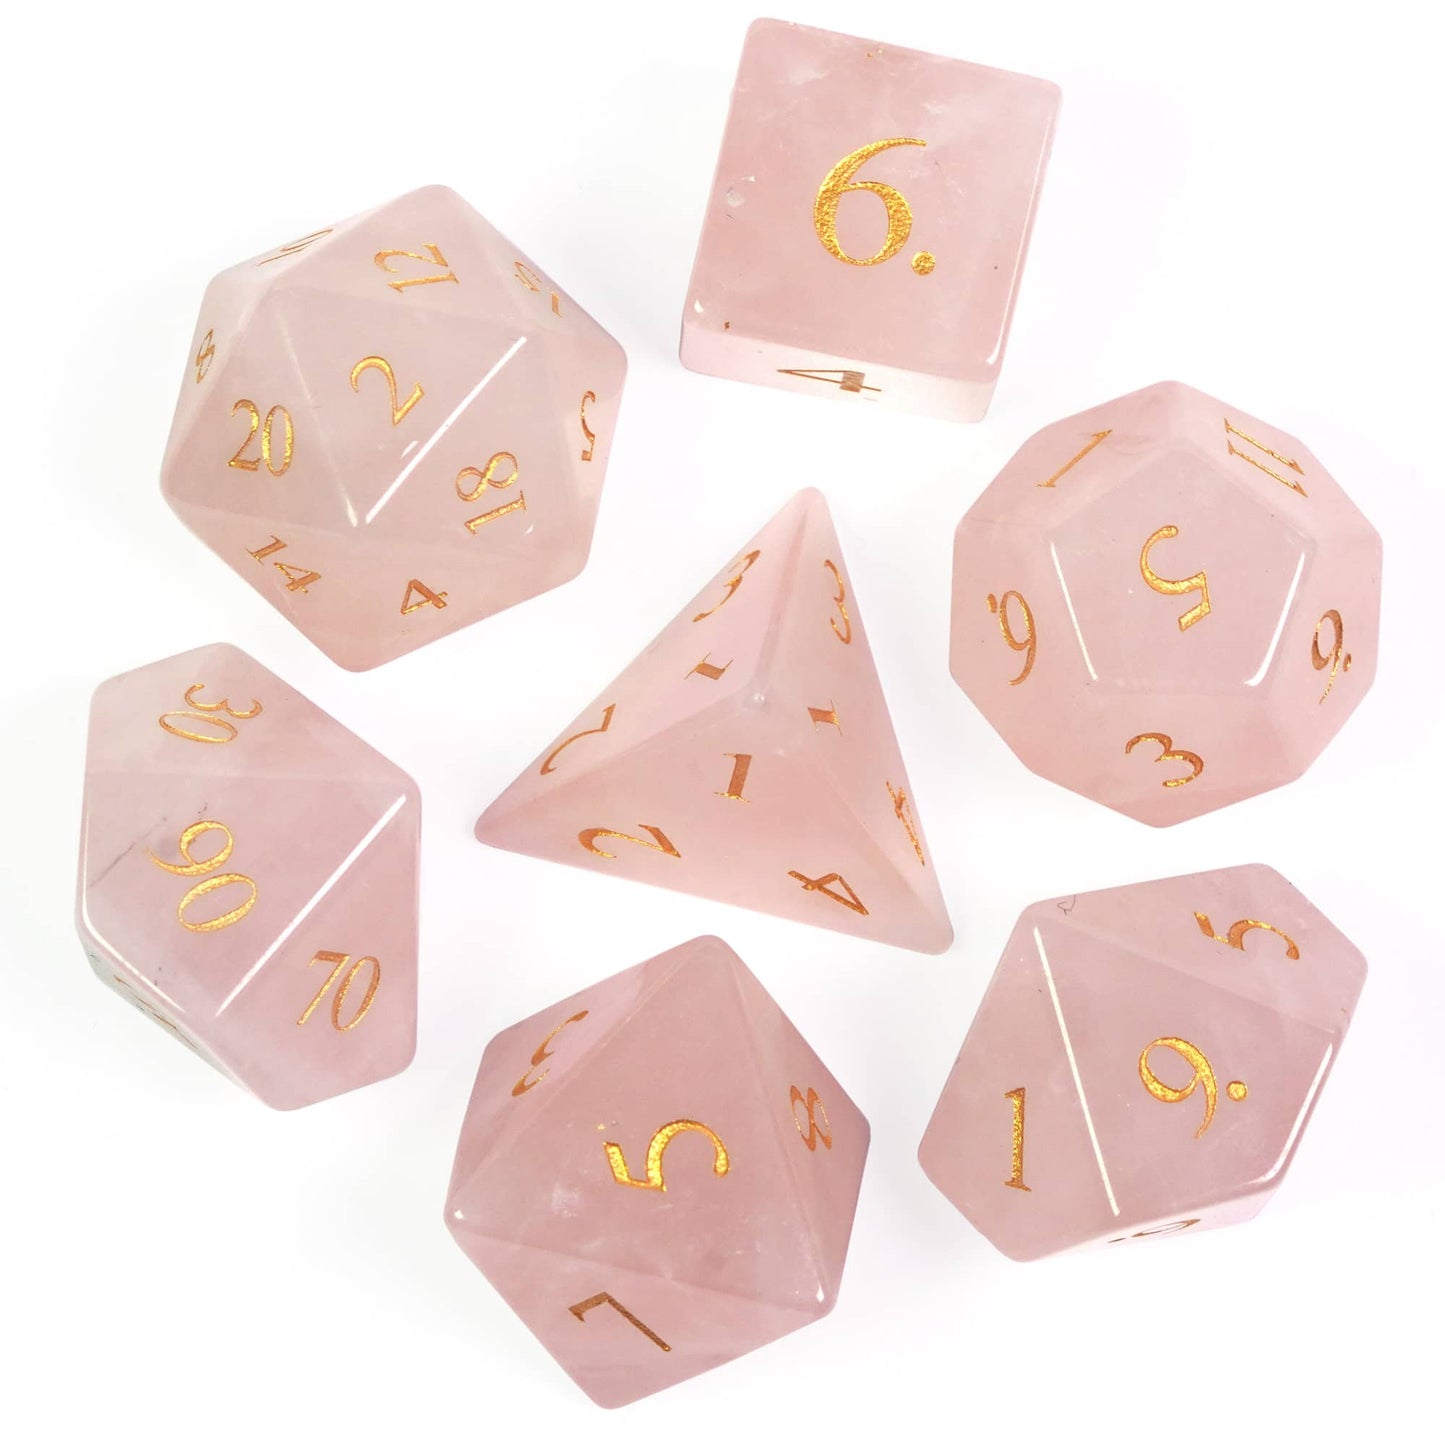 light pink colored stone dice set